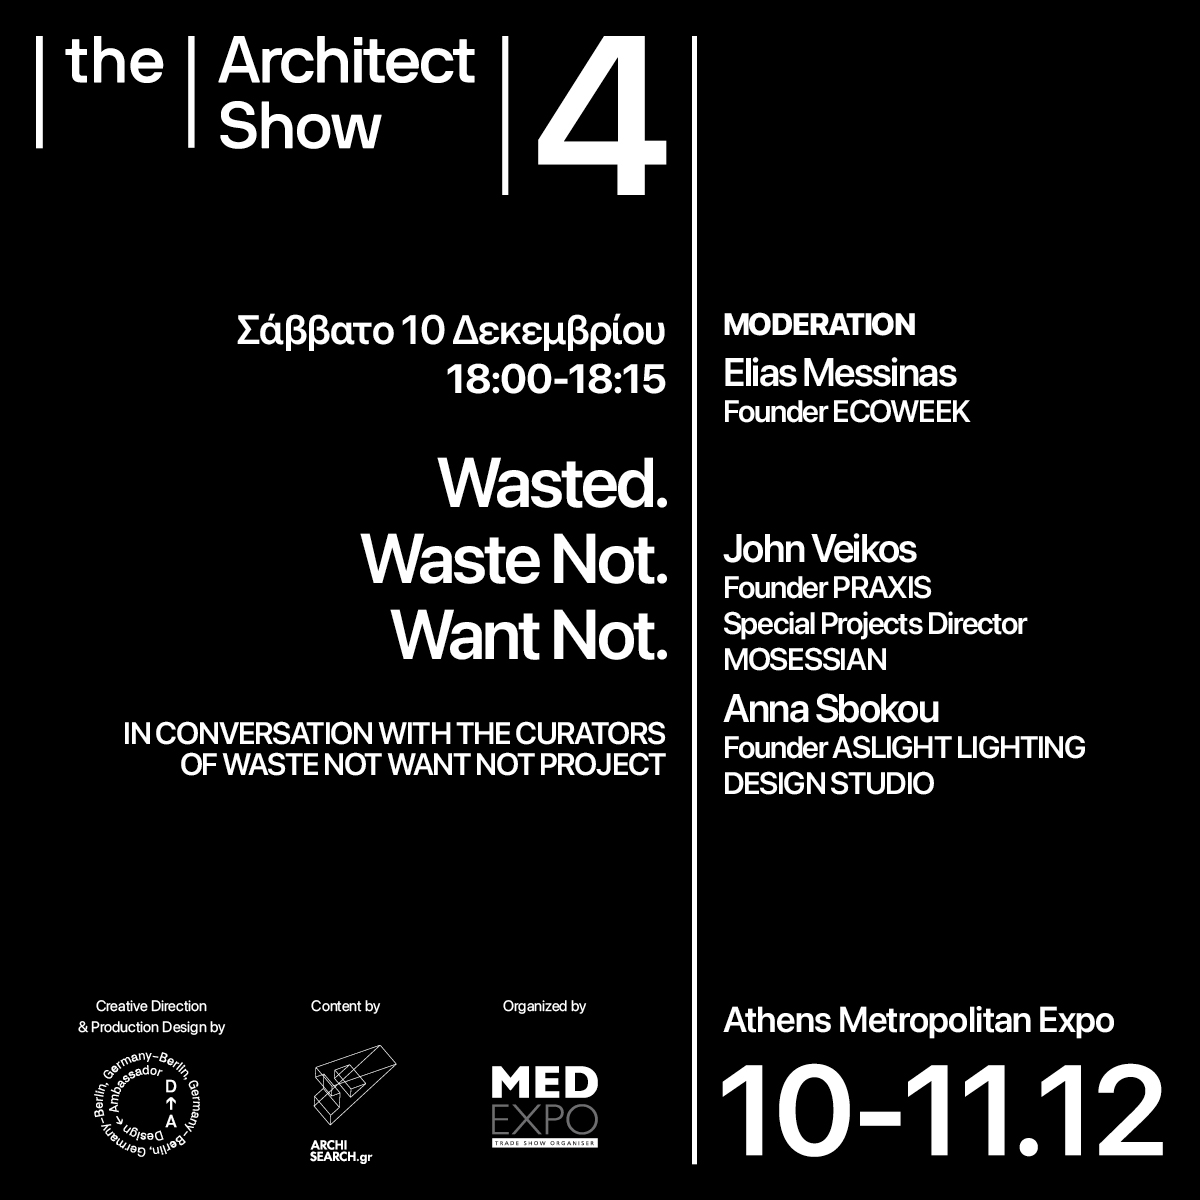 Archisearch The Architect Show 4 _ 'Fast forward', 10&11 Δεκεμβρίου 2022, Metropolitan Expo: τι θα δούμε την πρώτη μέρα του συνεδρίου που αναμένεται να αποτελέσει μία ανάσα δημιουργικής ανταλλαγής γνώσεων και ιδεών